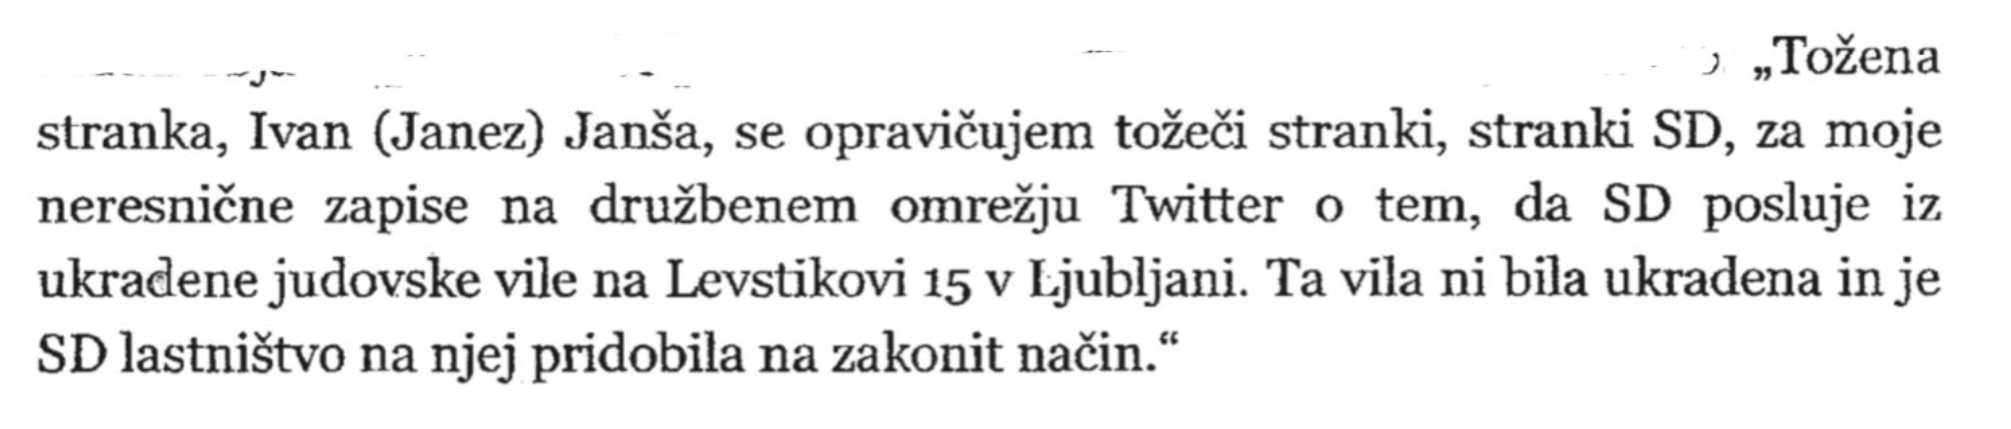 Janševo opravičilo SD na Twitterju